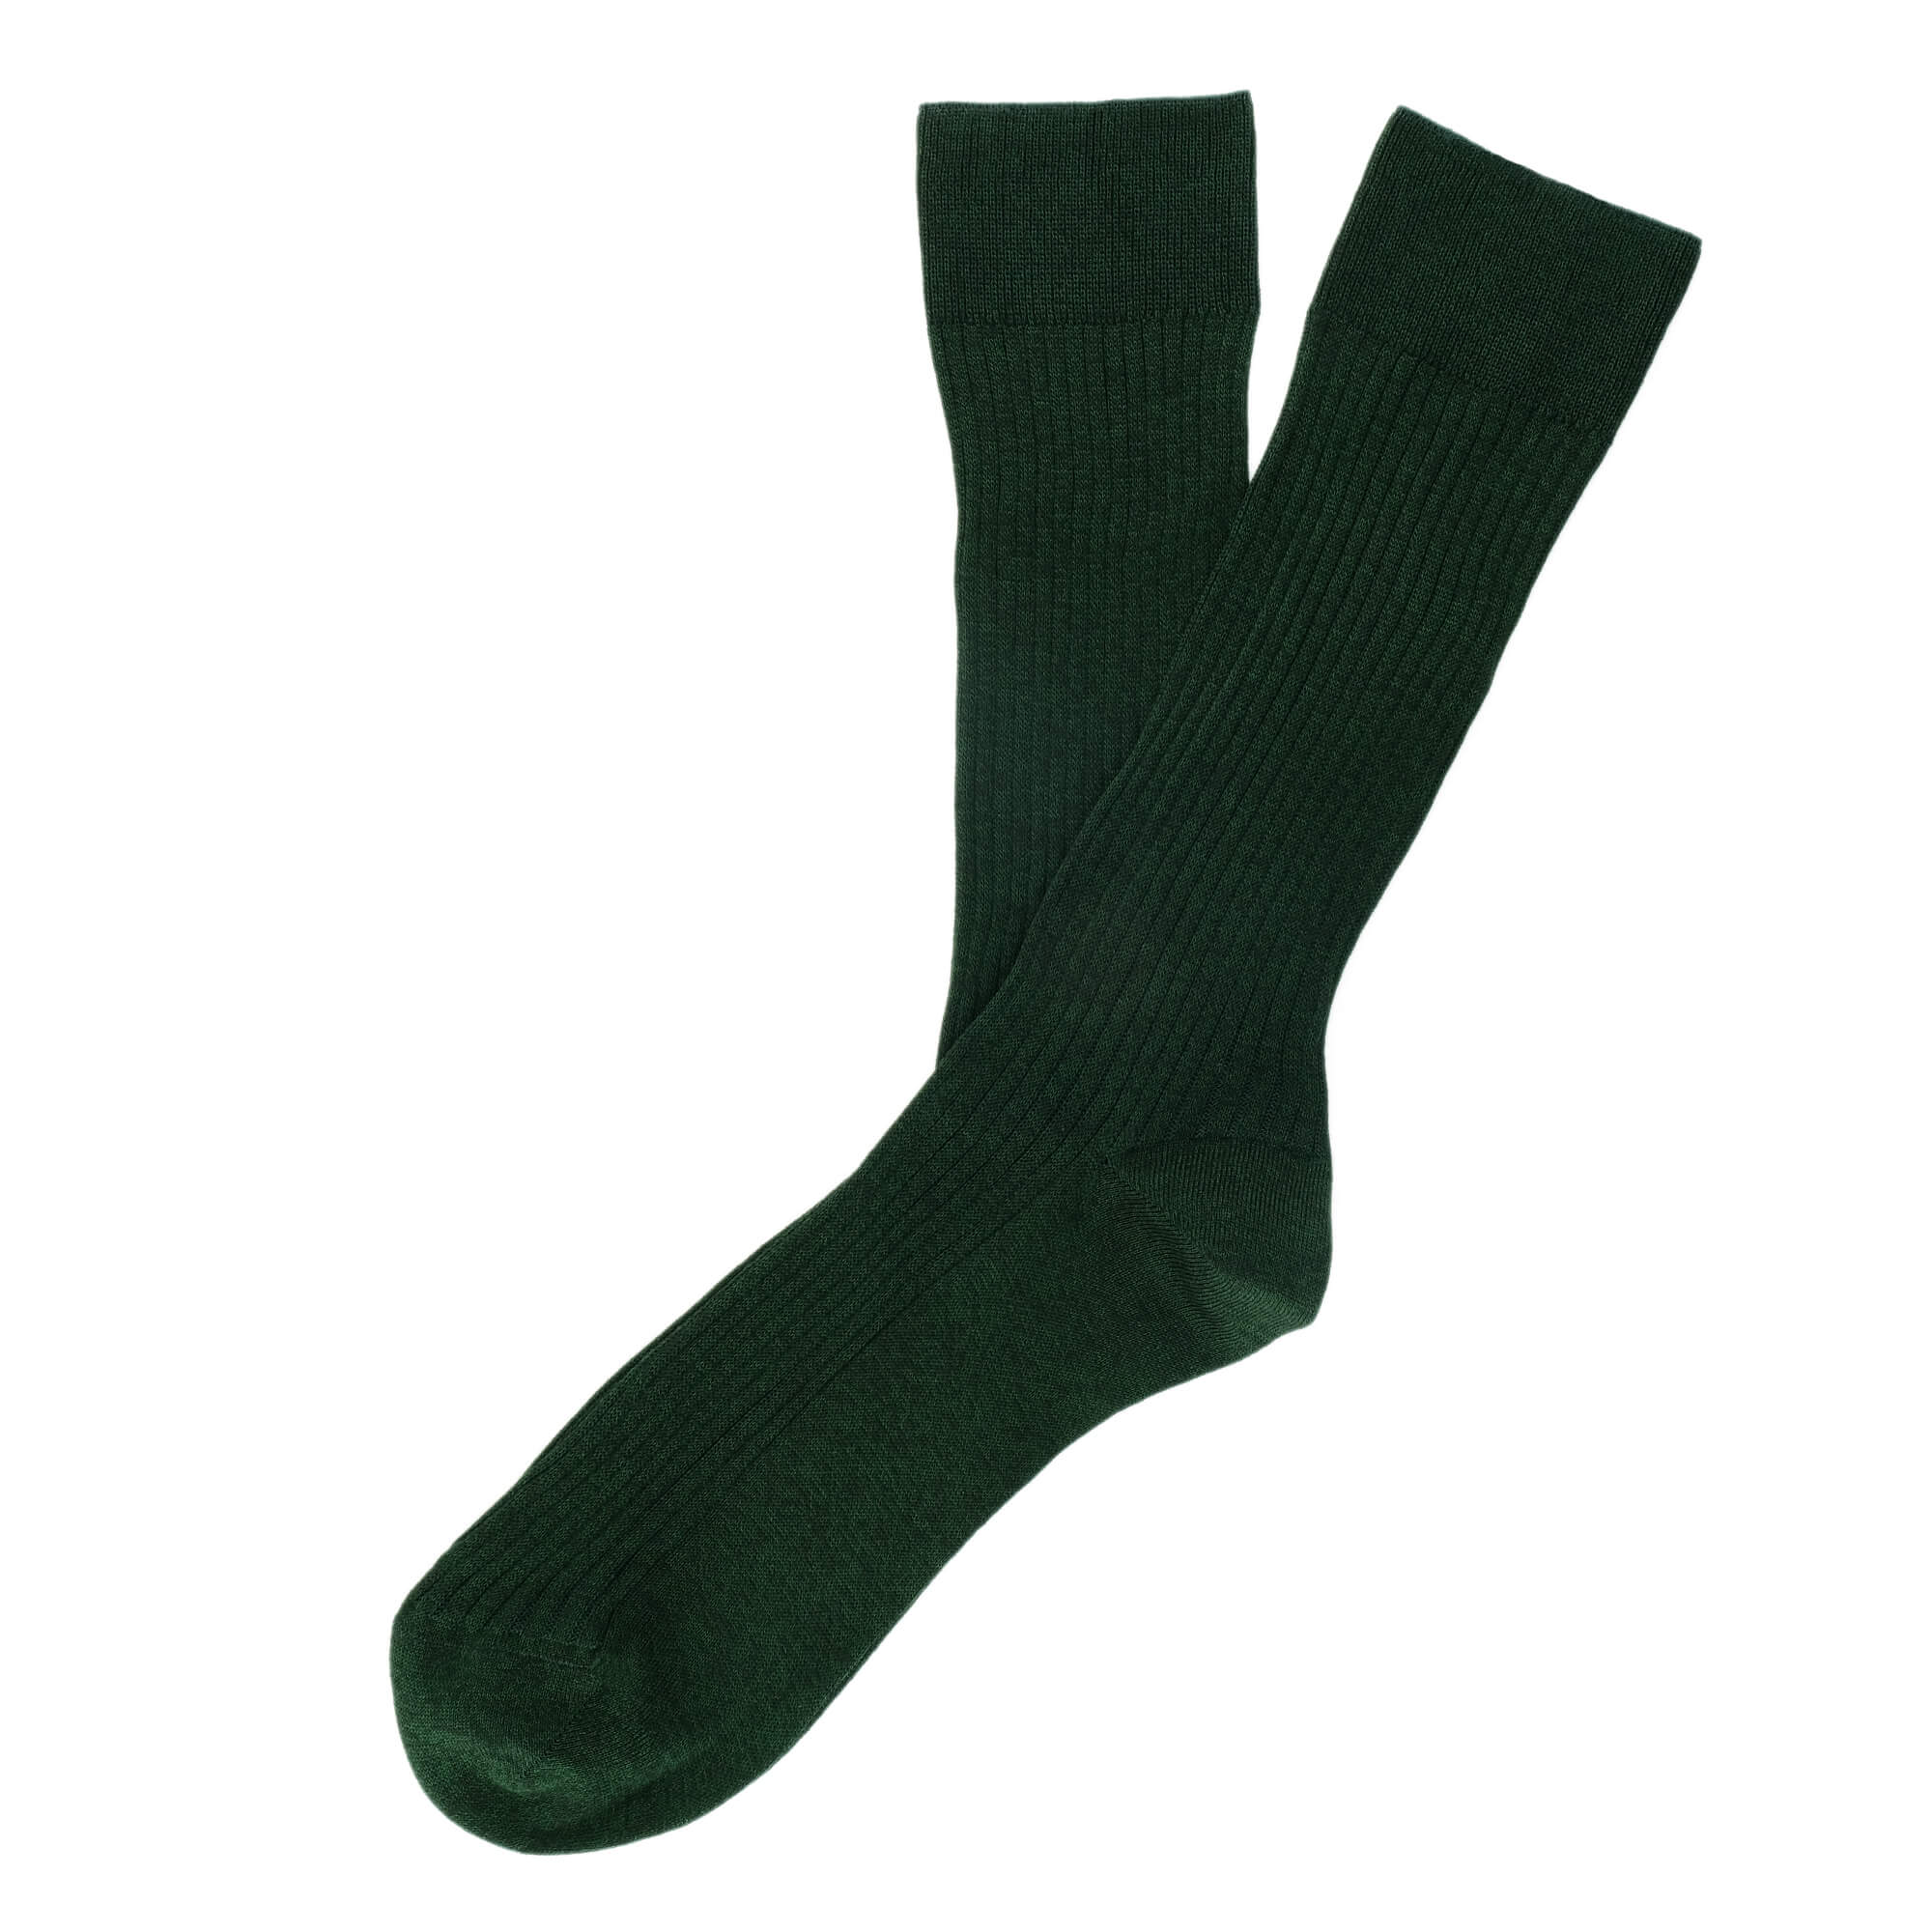 Mens Socks - Thousand Ribs Men's Socks - Green⎪Etiquette Clothiers